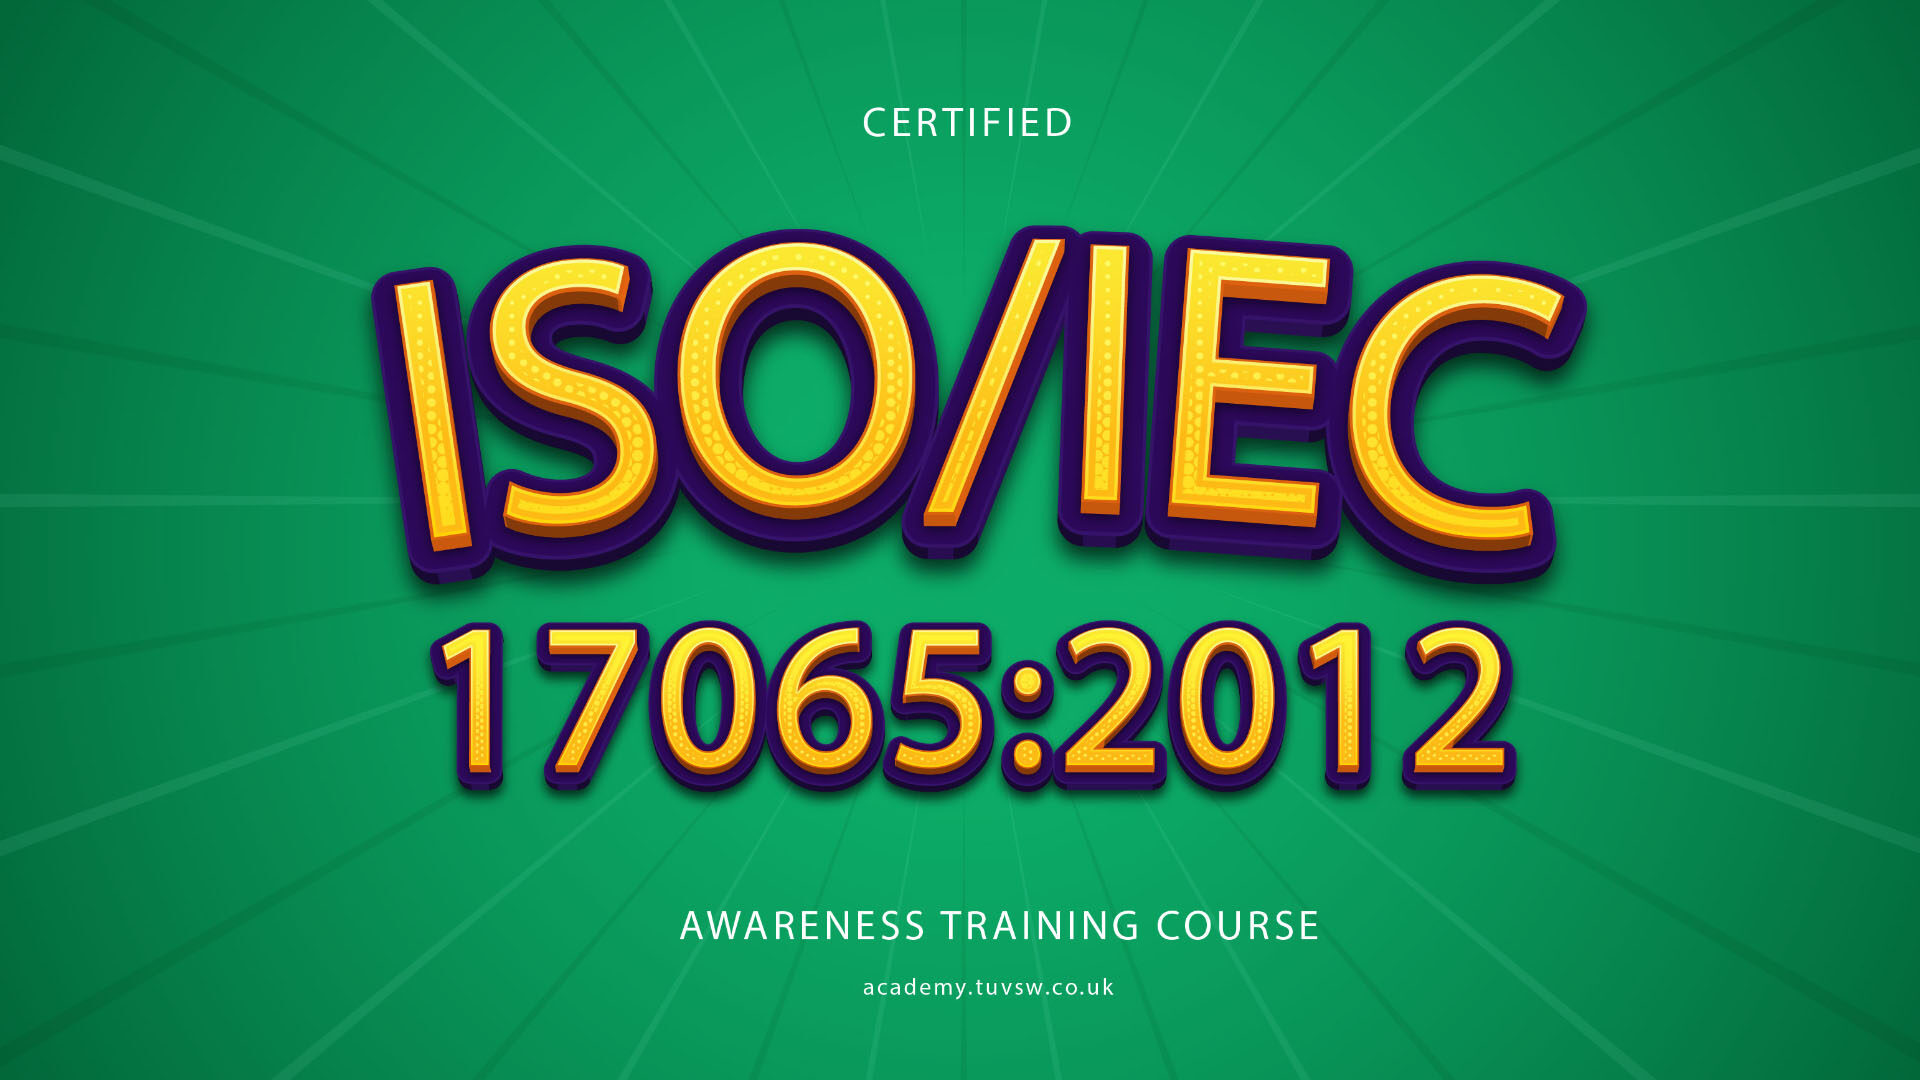 ISO/IEC 17065:2012 Awareness Training Course